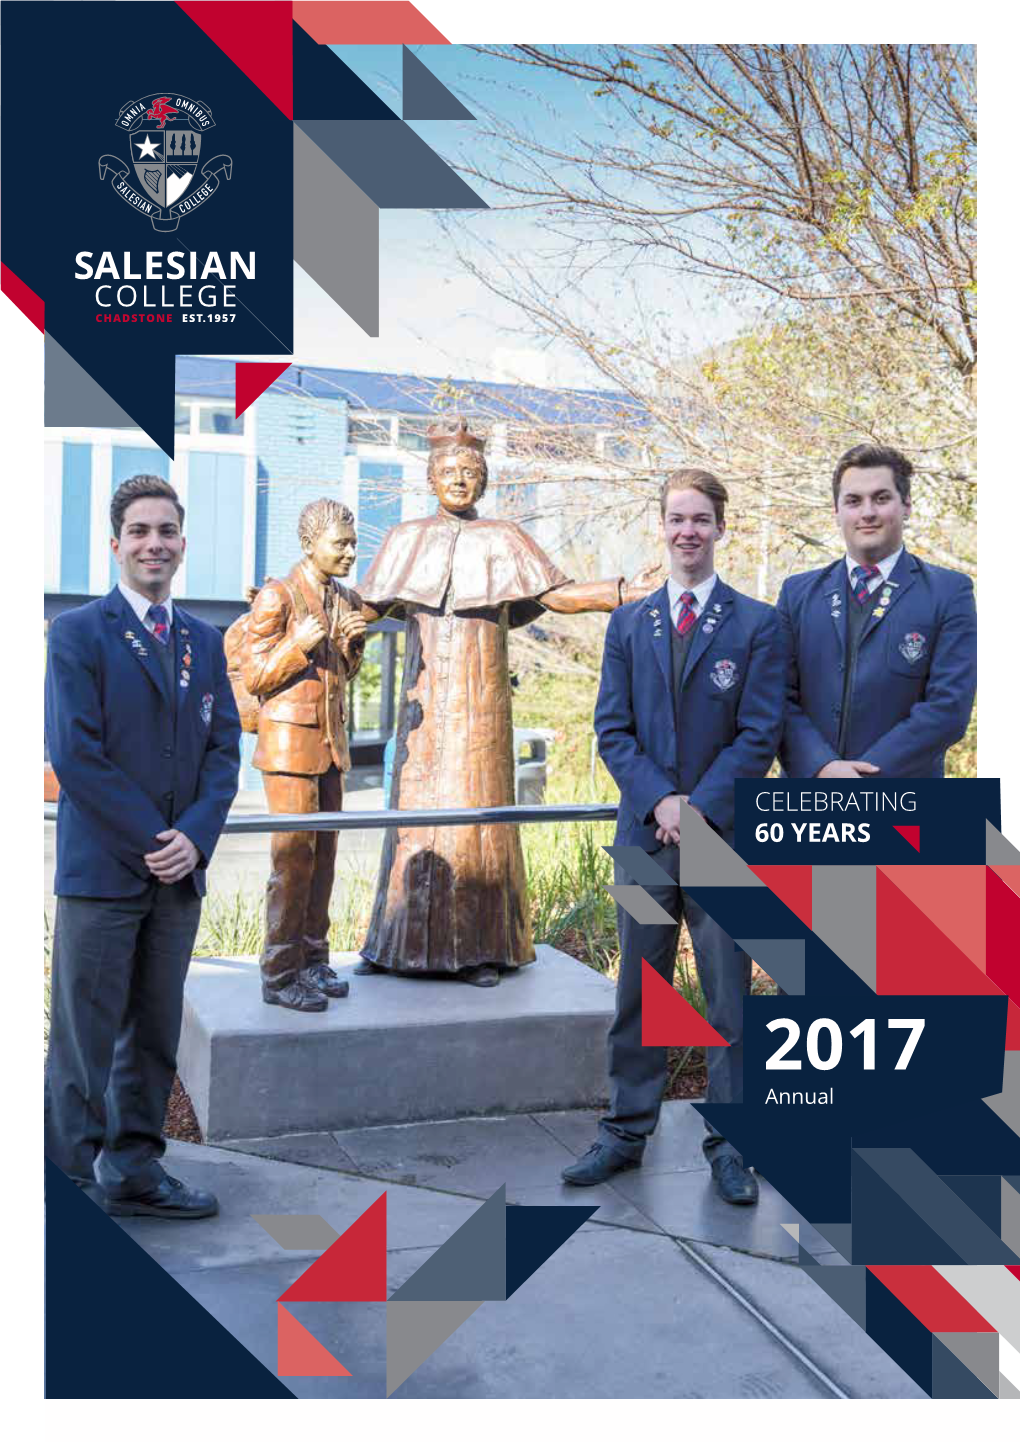 2017 Annual Credits Editor: Nikita Rodrigues Publicrelations@Salesian.Vic.Edu.Au